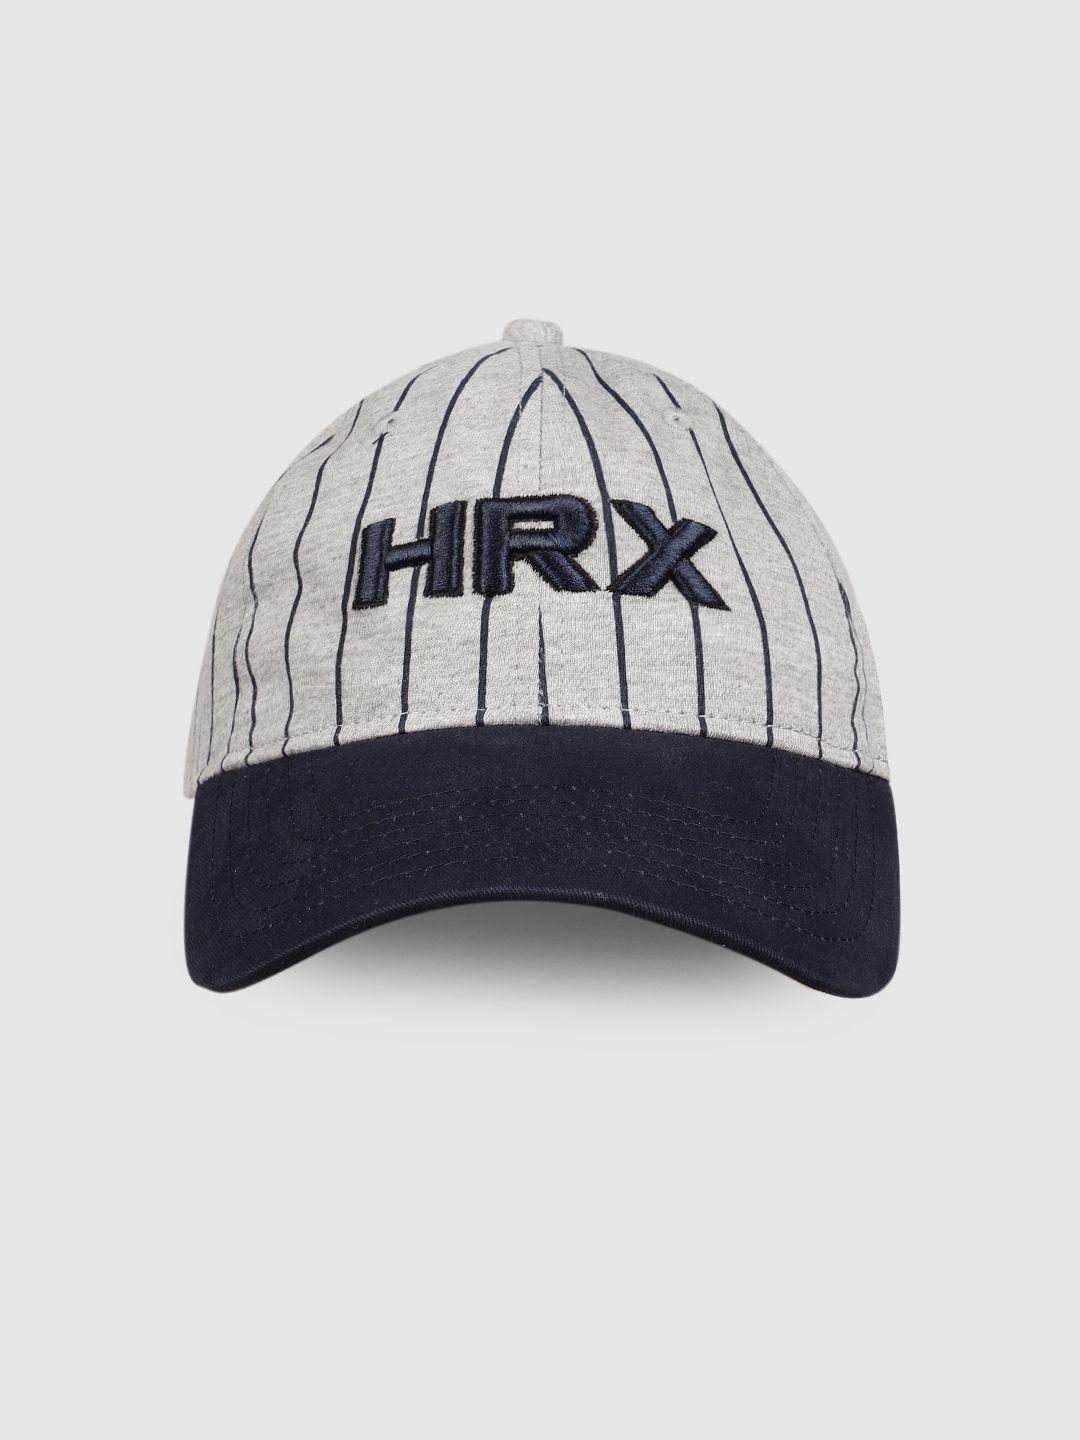 hrx-by-hrithik-roshan-unisex-grey-&-navy-blue-striped-baseball-cap